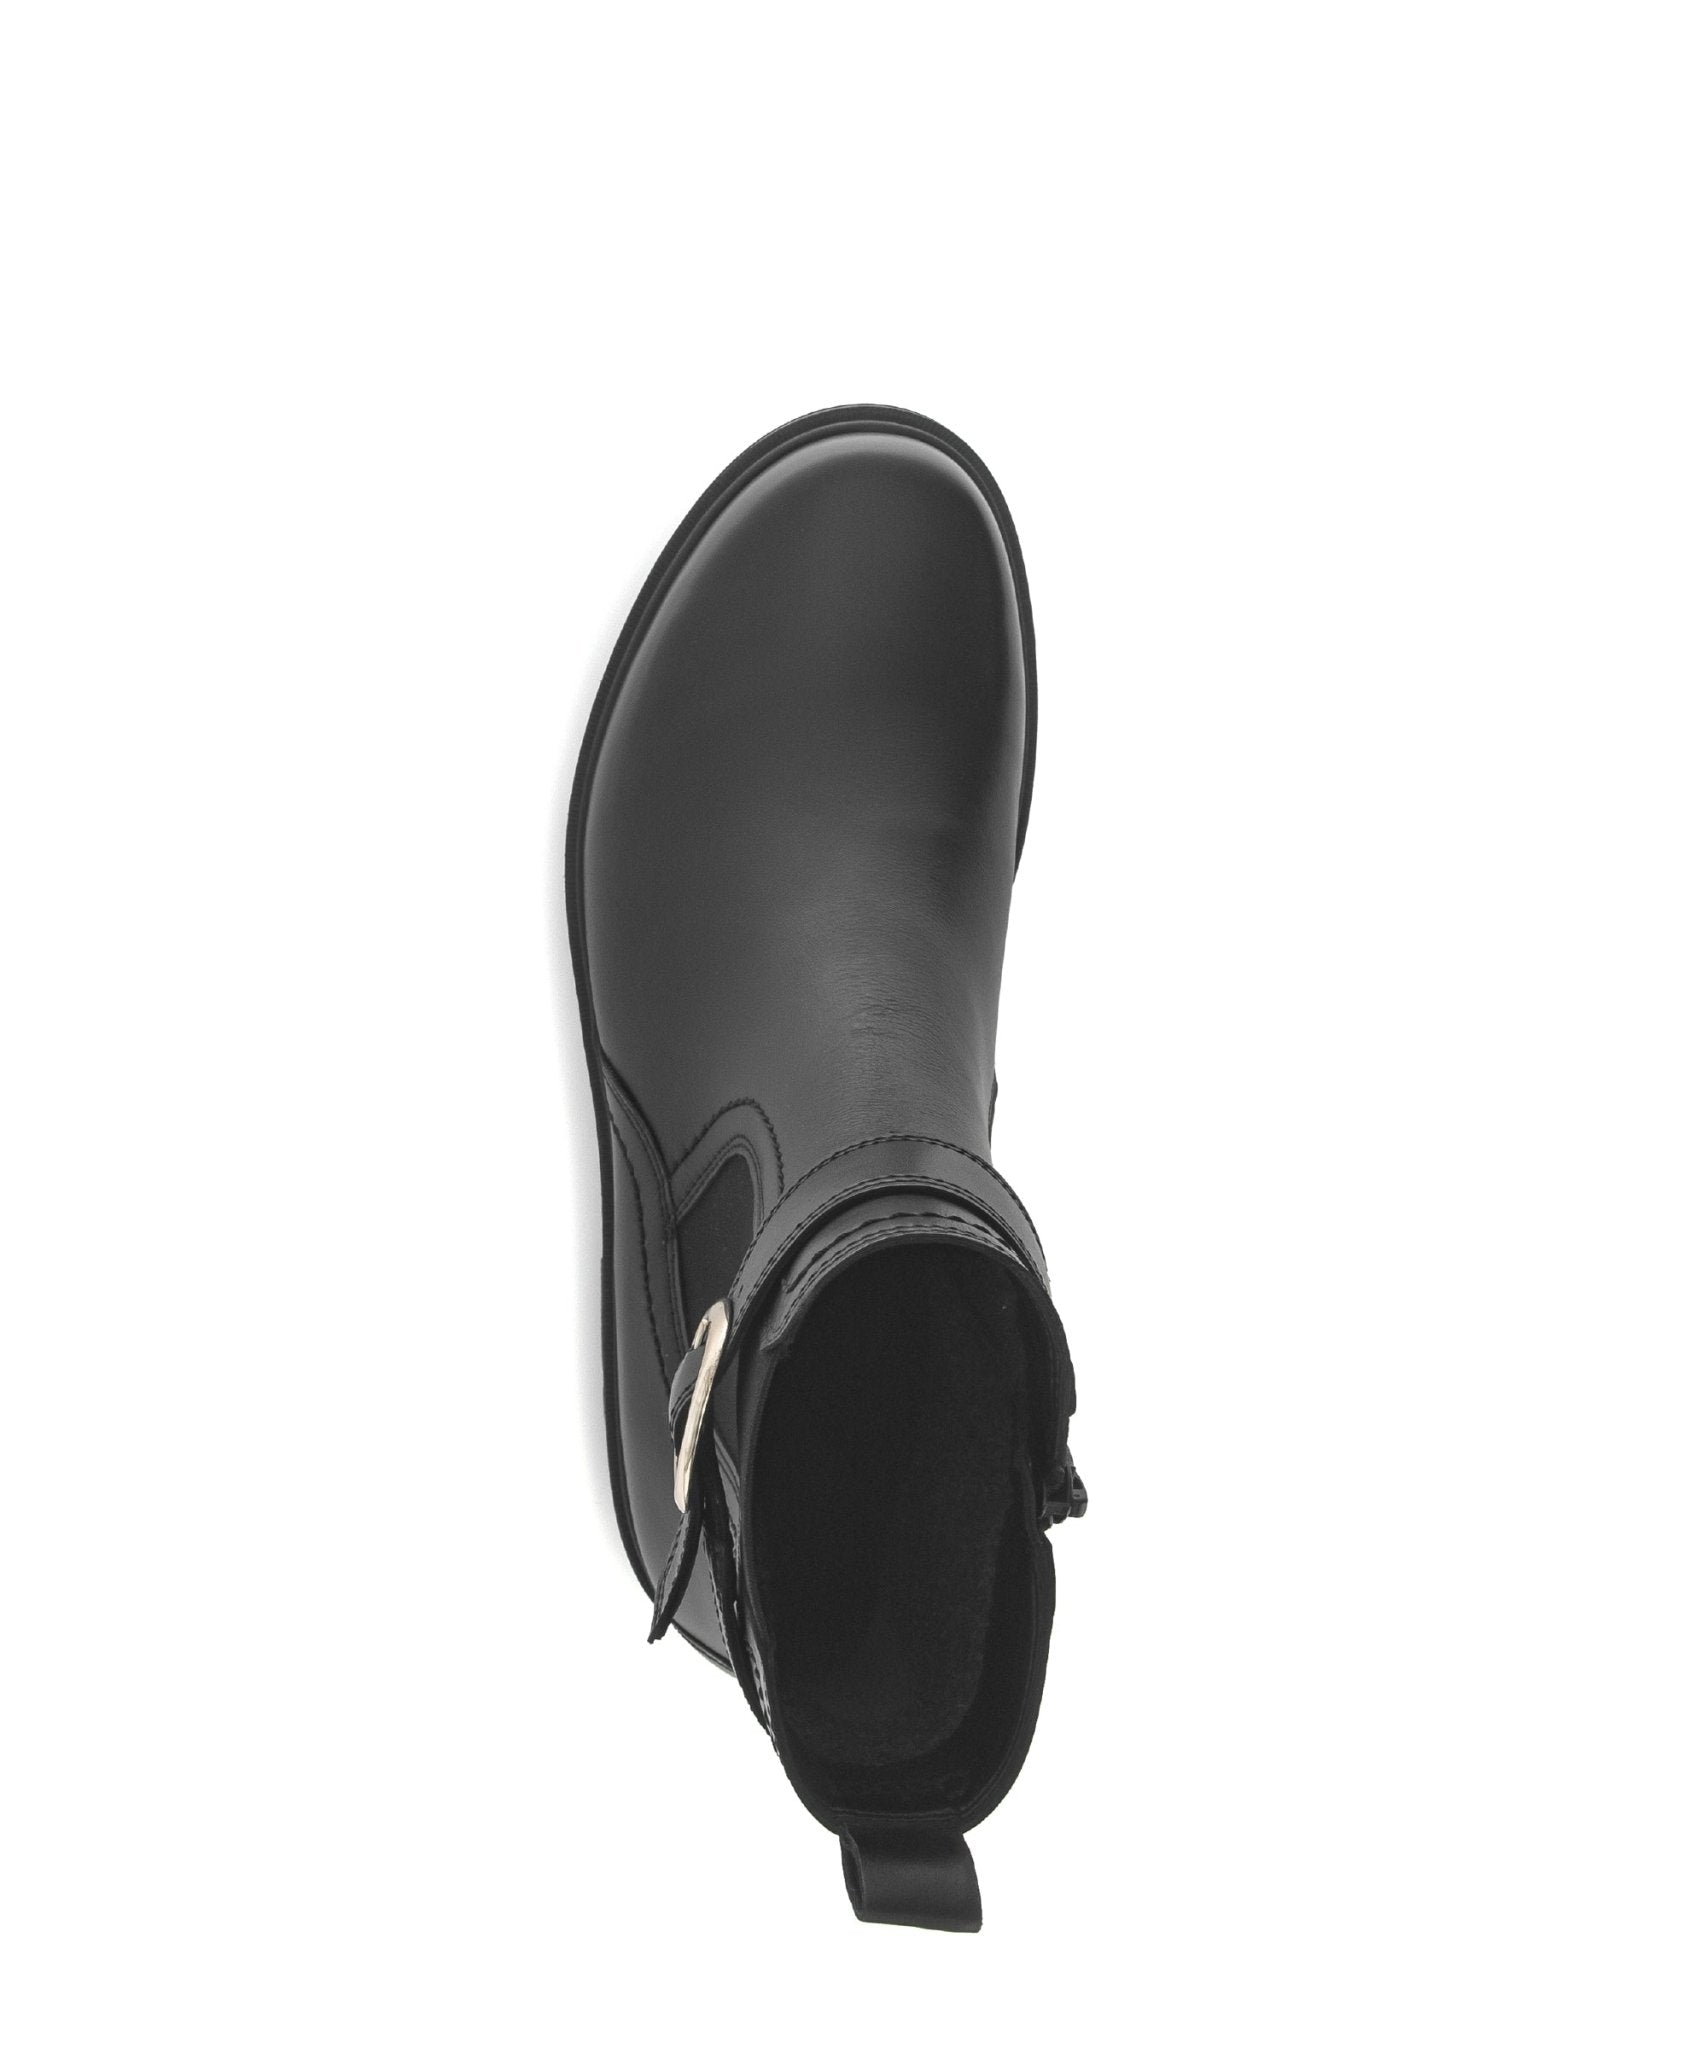 '34.653.27' women's boot - Black - Chaplinshoes'34.653.27' women's boot - BlackGabor